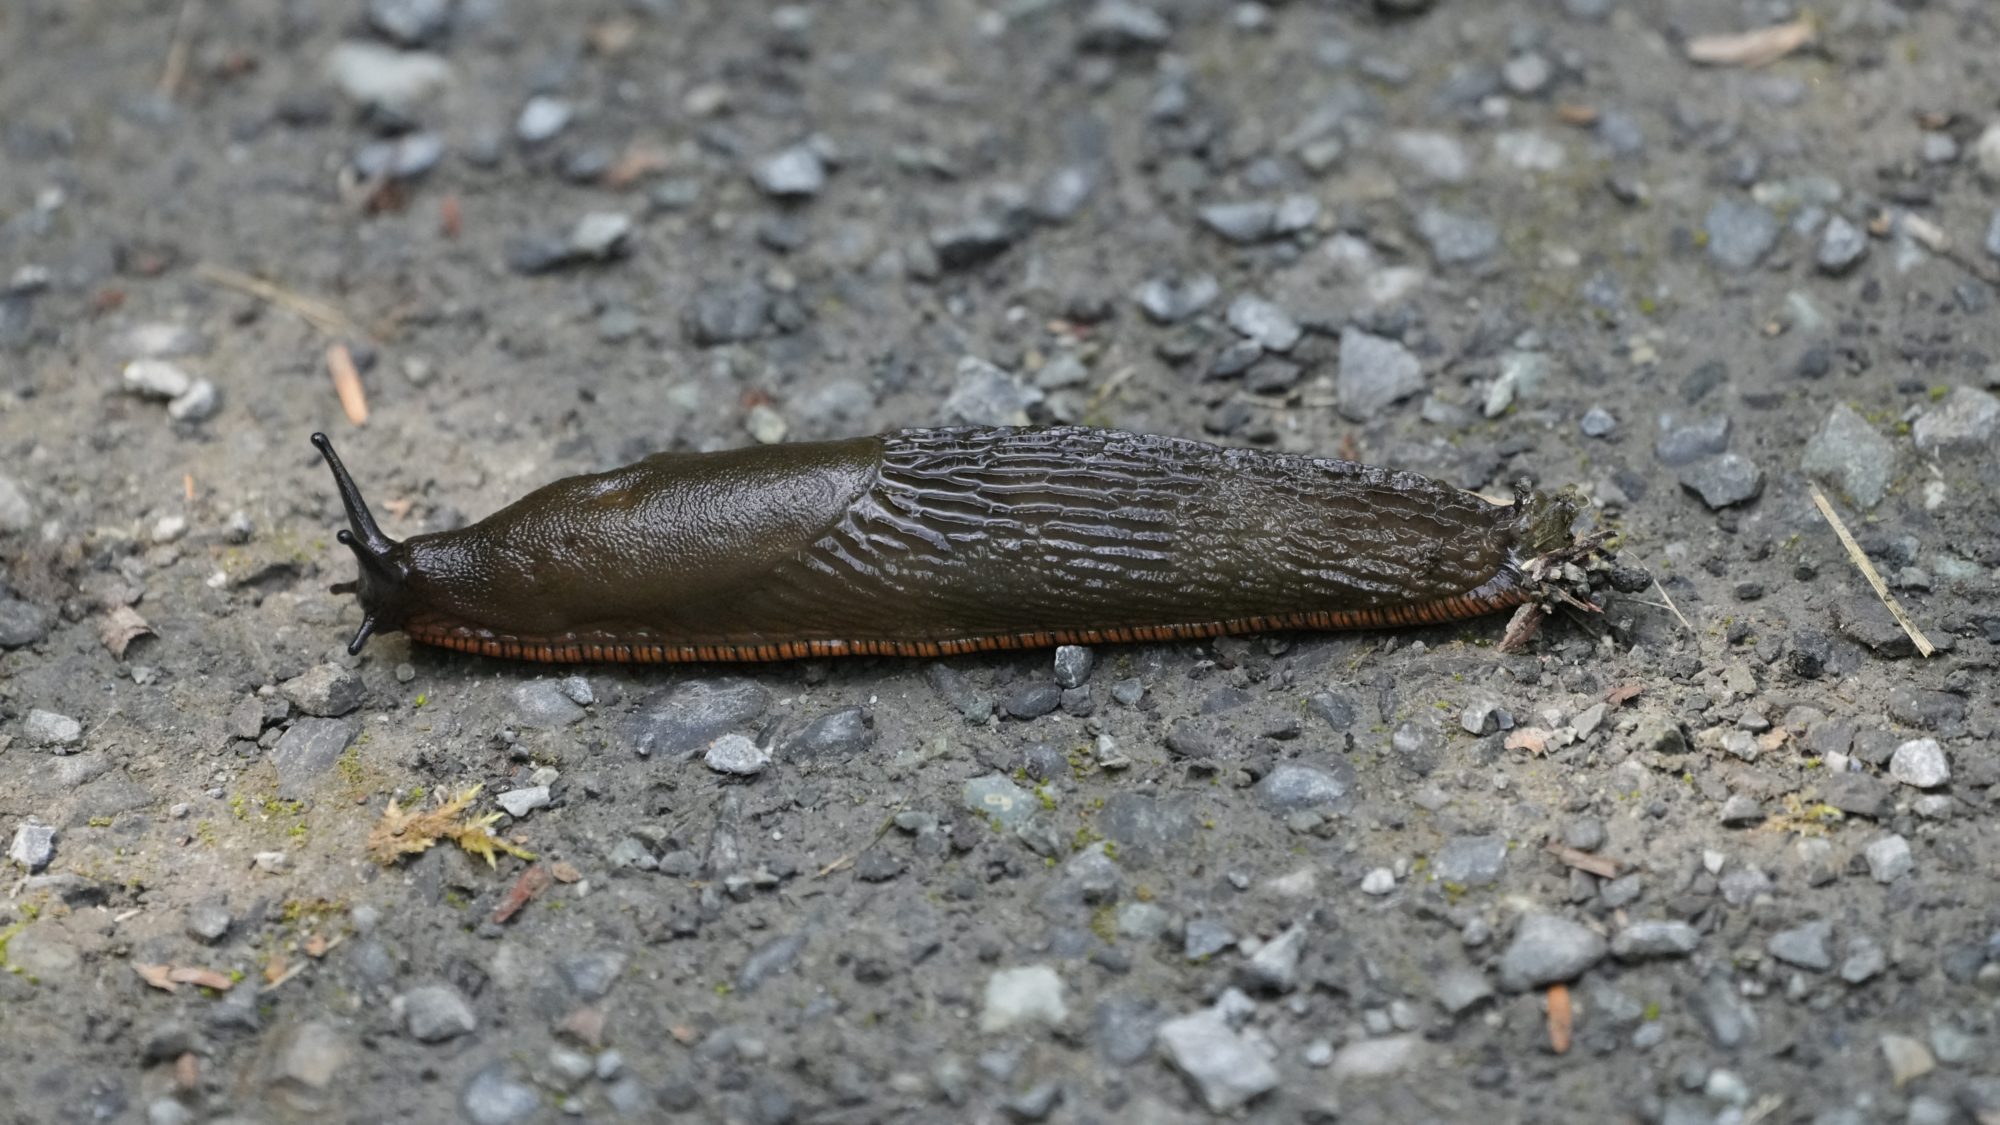 A black slug on the gravelly trail